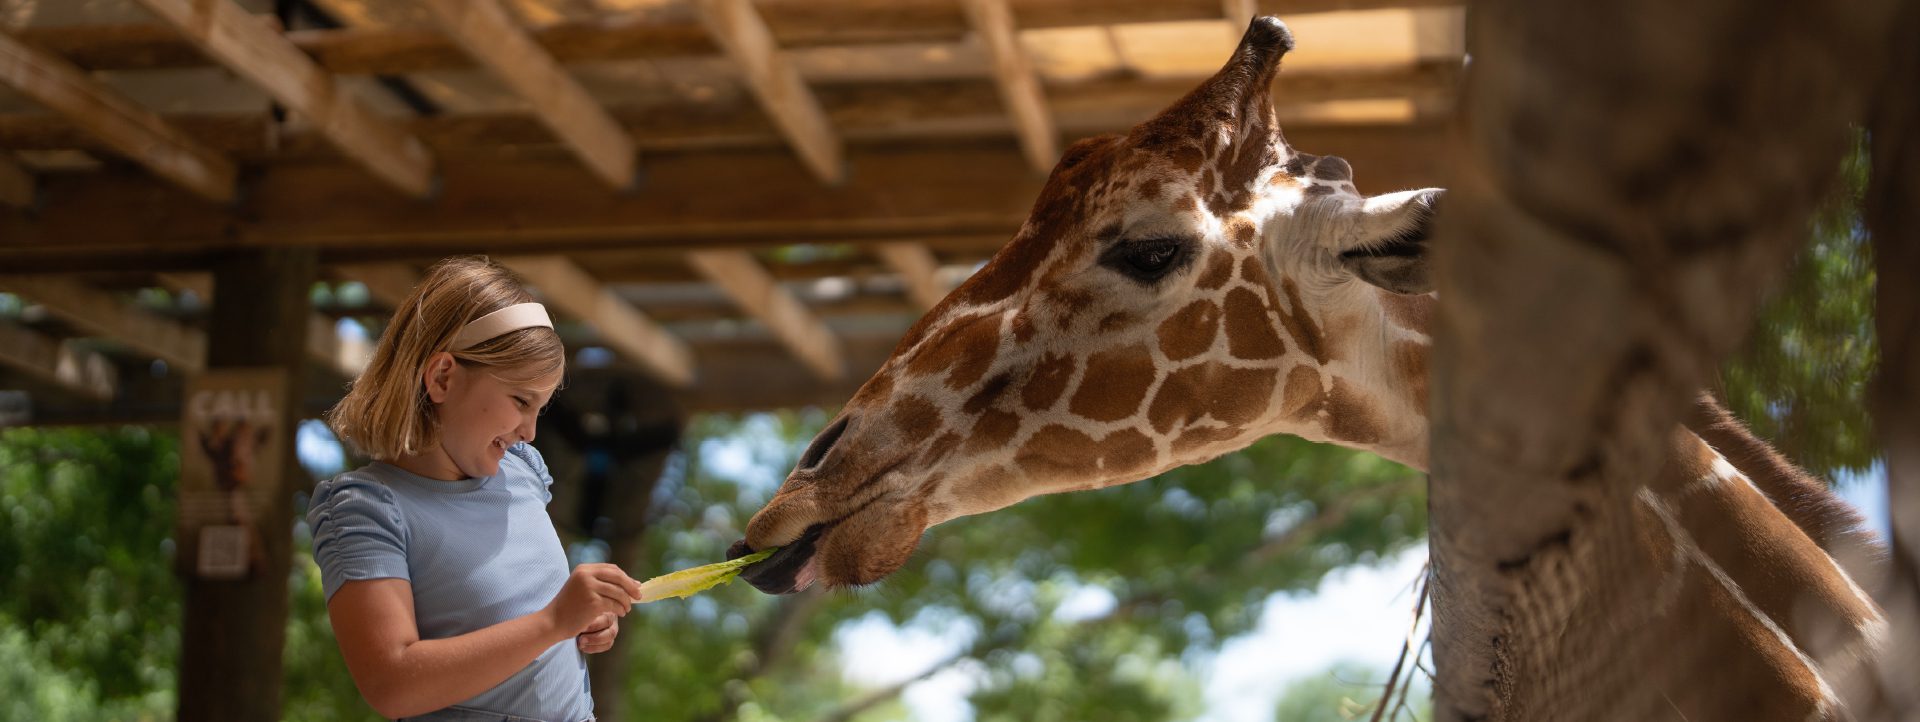 young girl feeding a giraffe